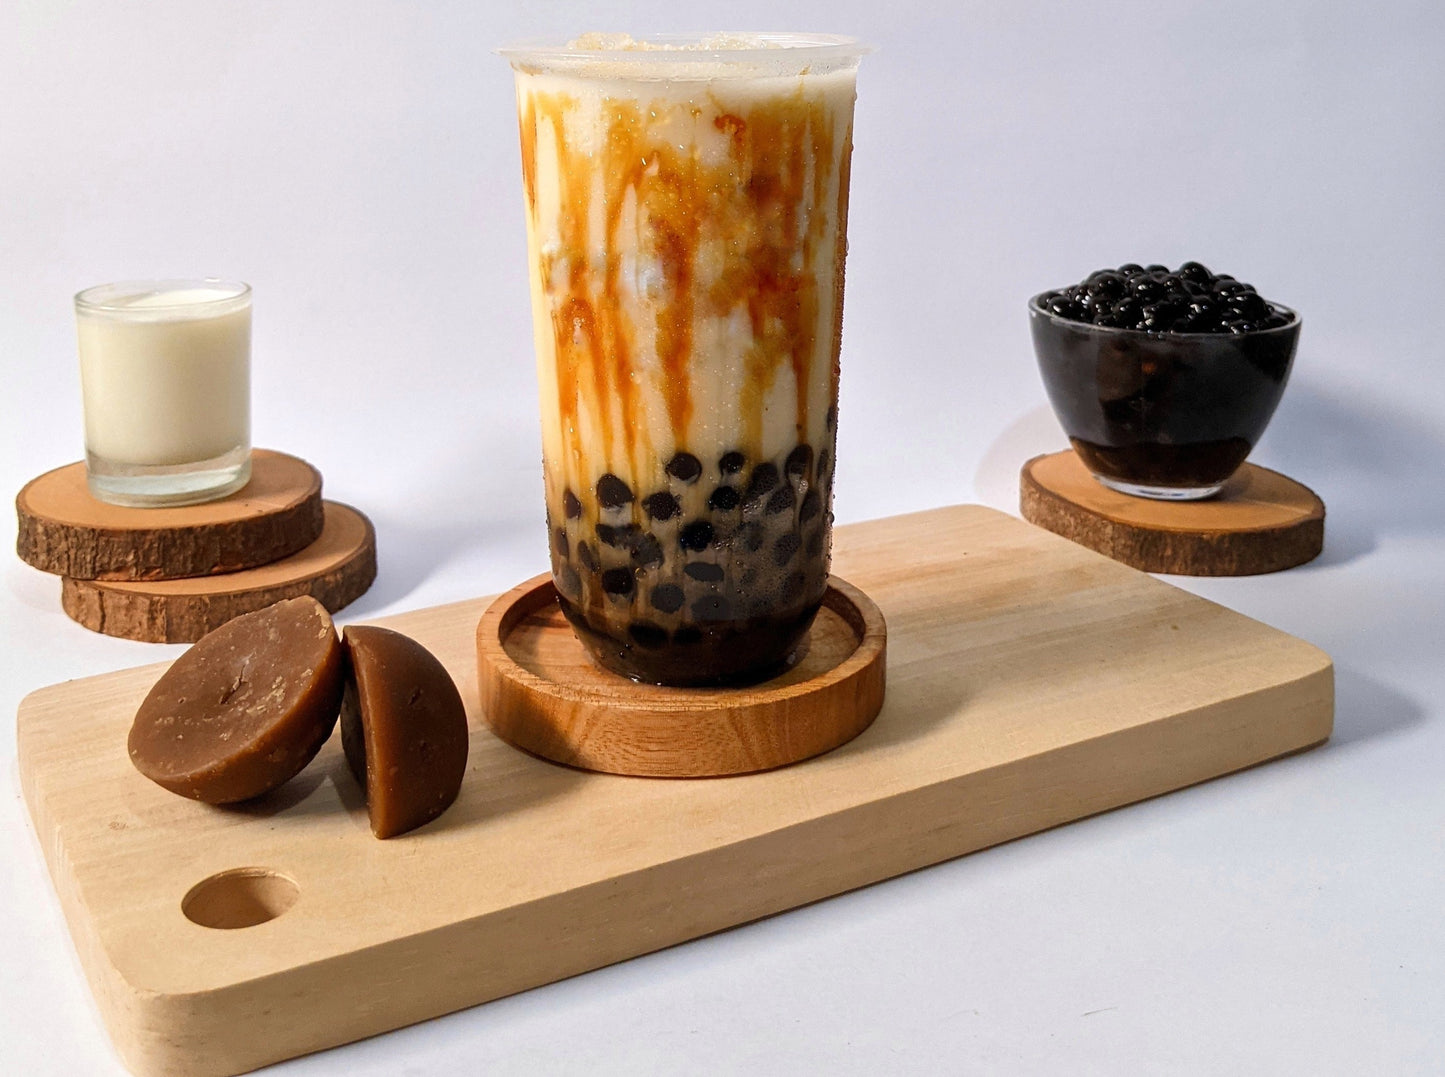 Brown Sugar Latte DIY Bubble Tea Kit ~ Makes 13 serves!